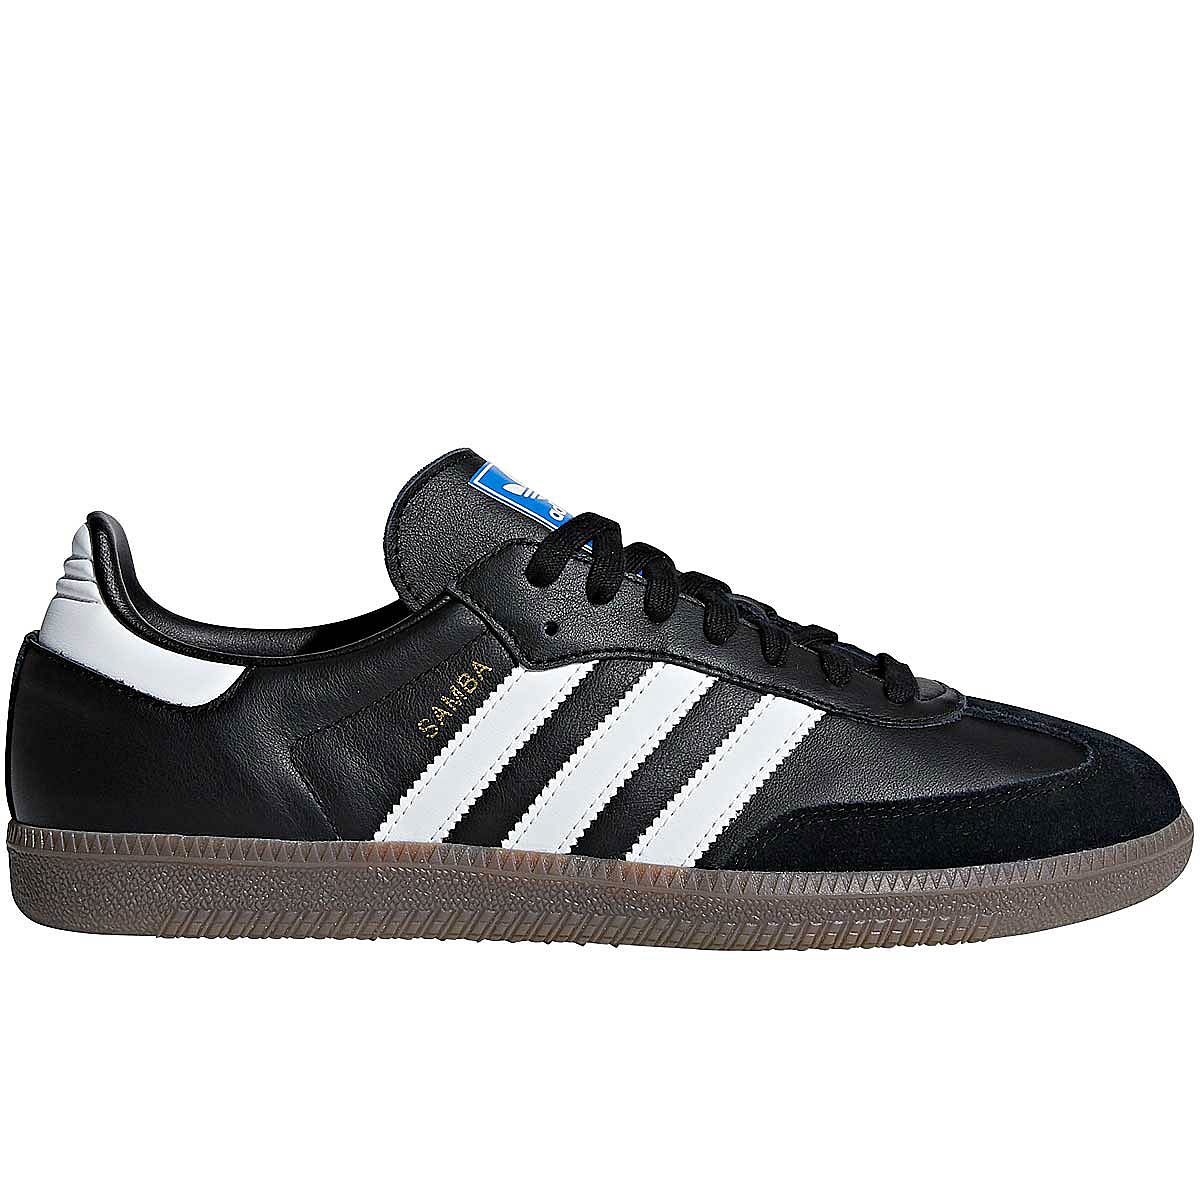 Adidas Samba Og, Black/white/brown EU36